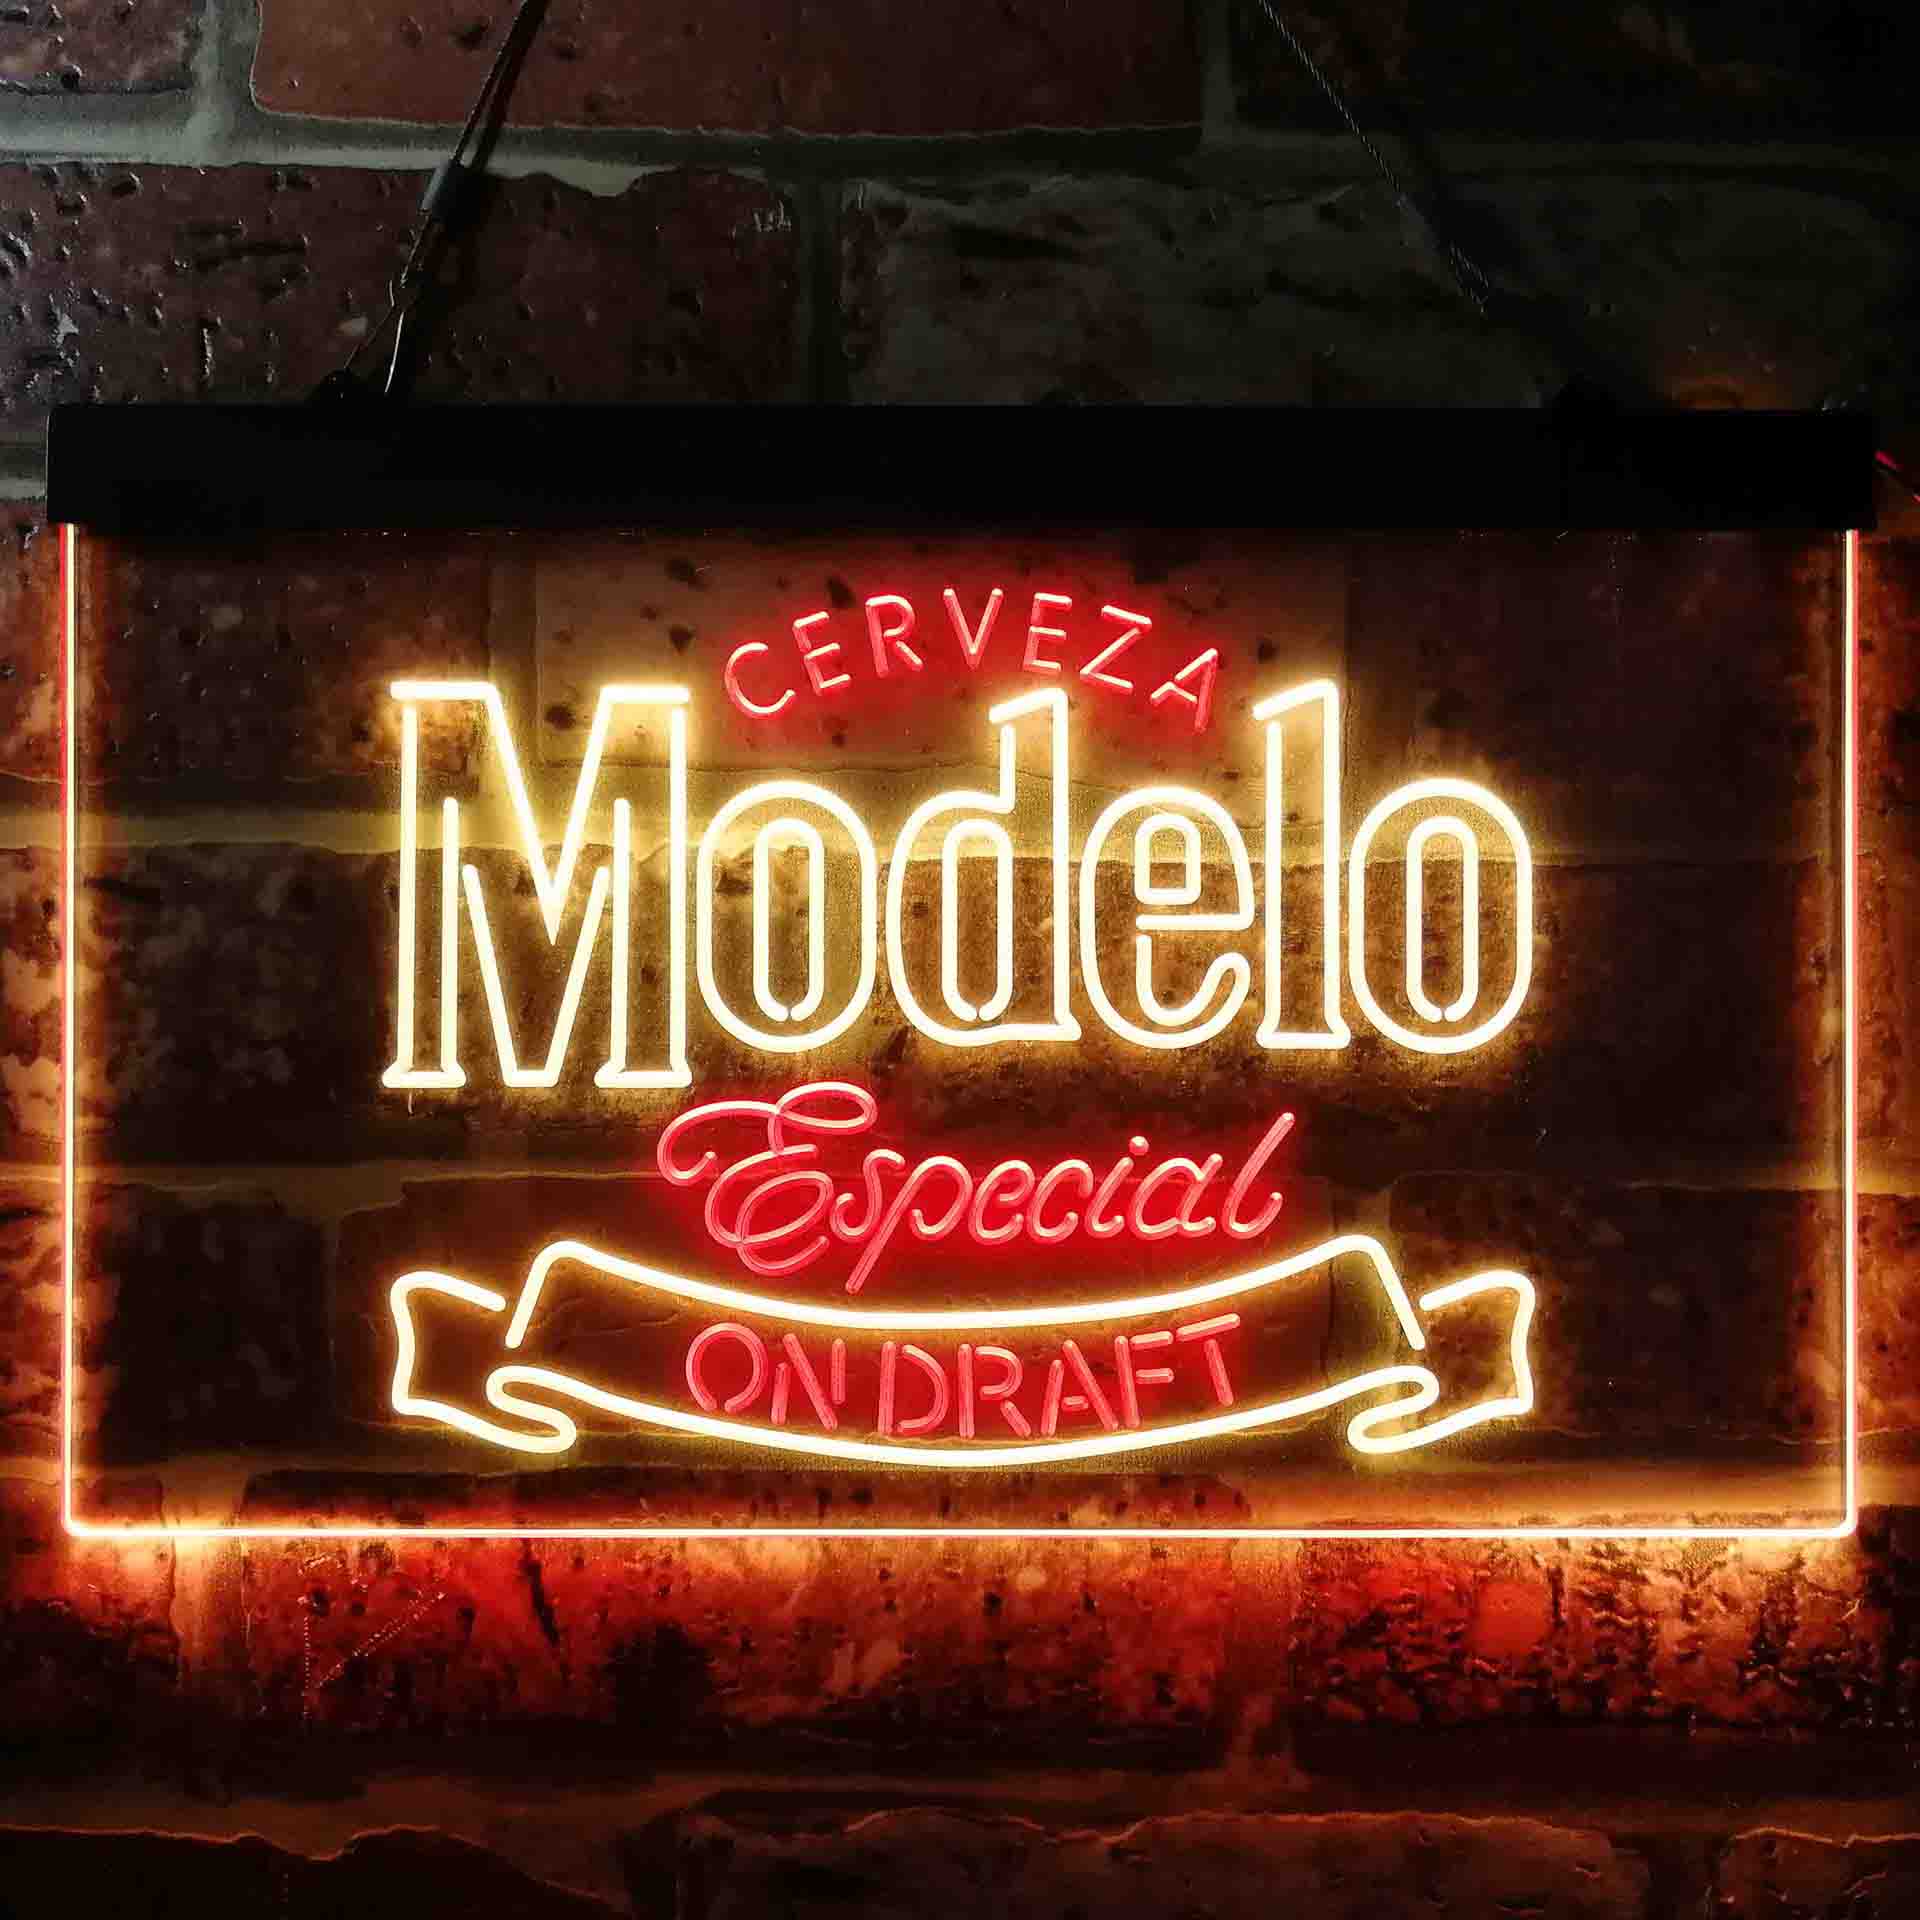 Cerveza Modelo Especial Draft Neon-Like LED Sign